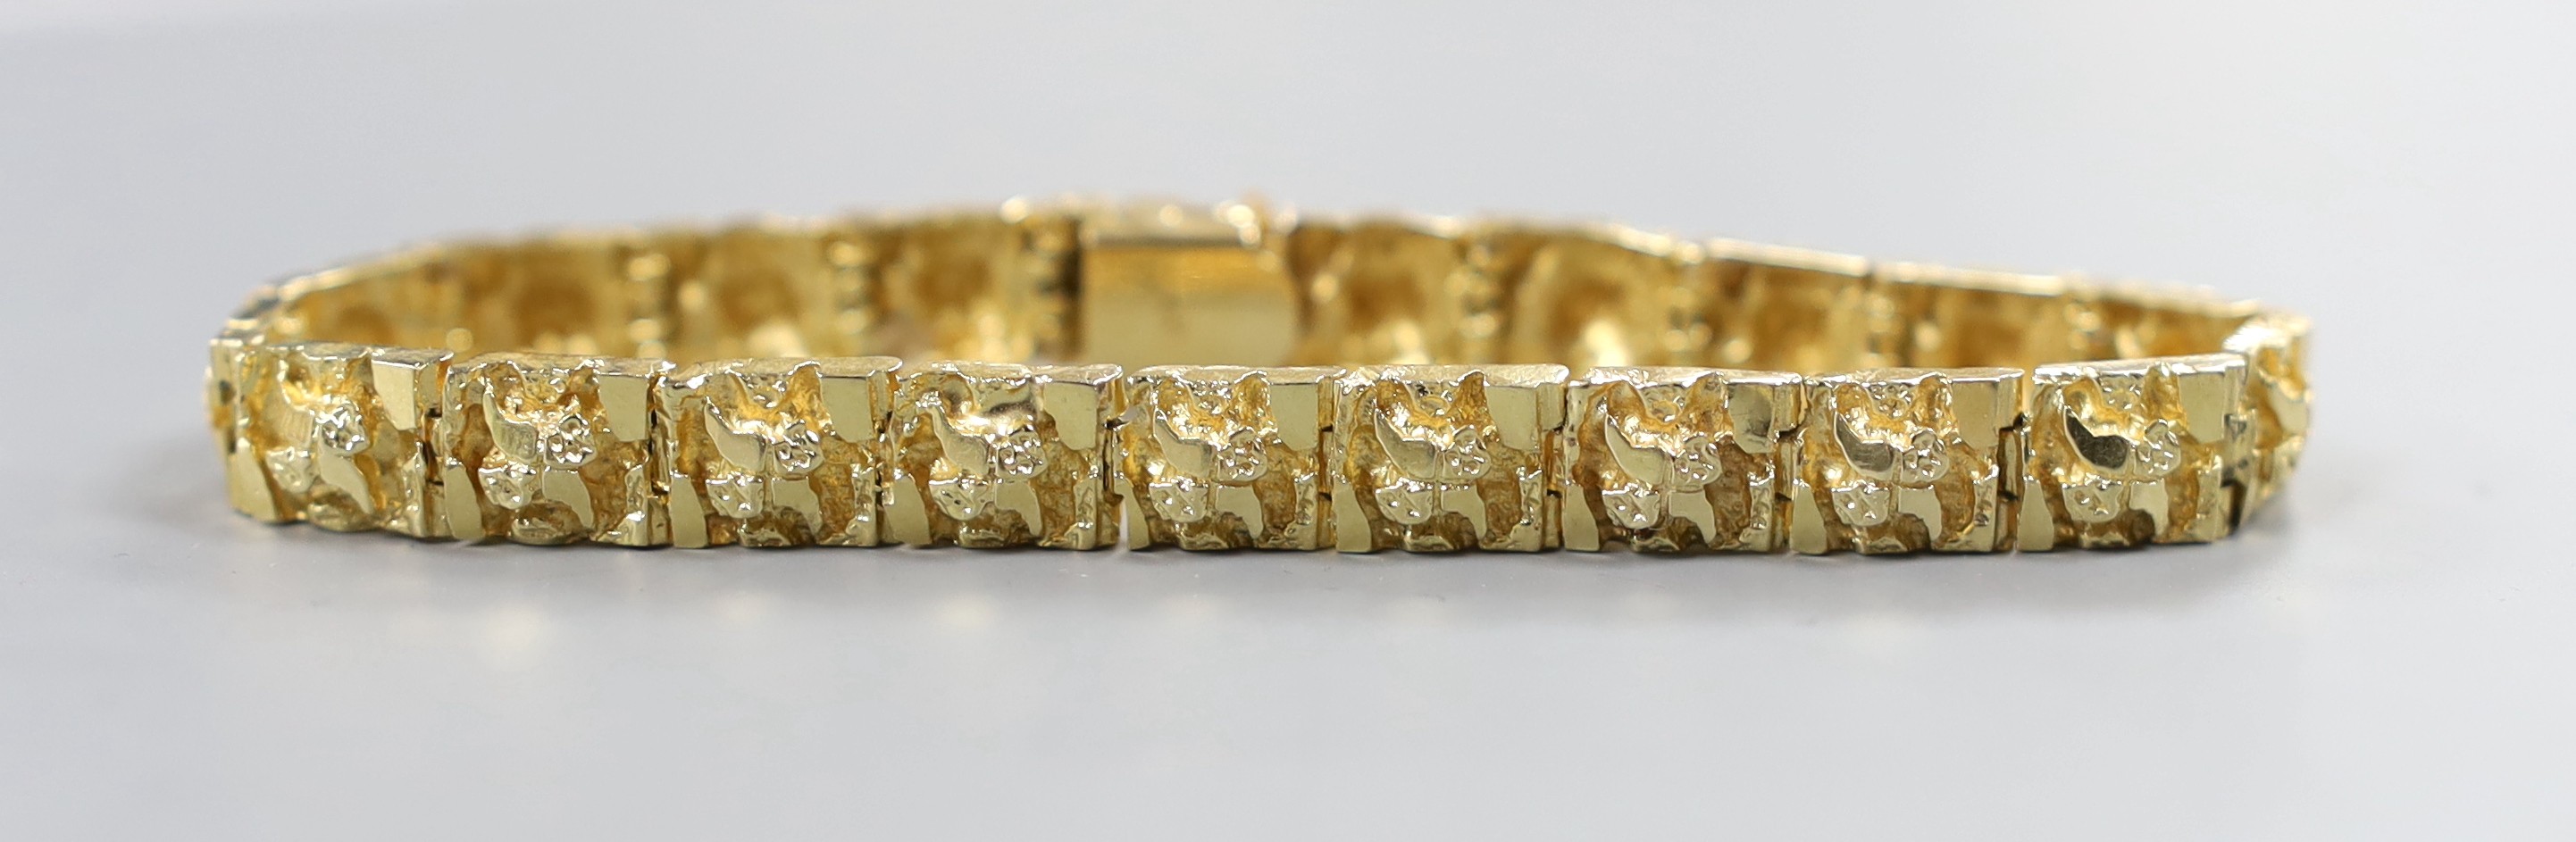 A modern textured 14ct bracelet, 18cm